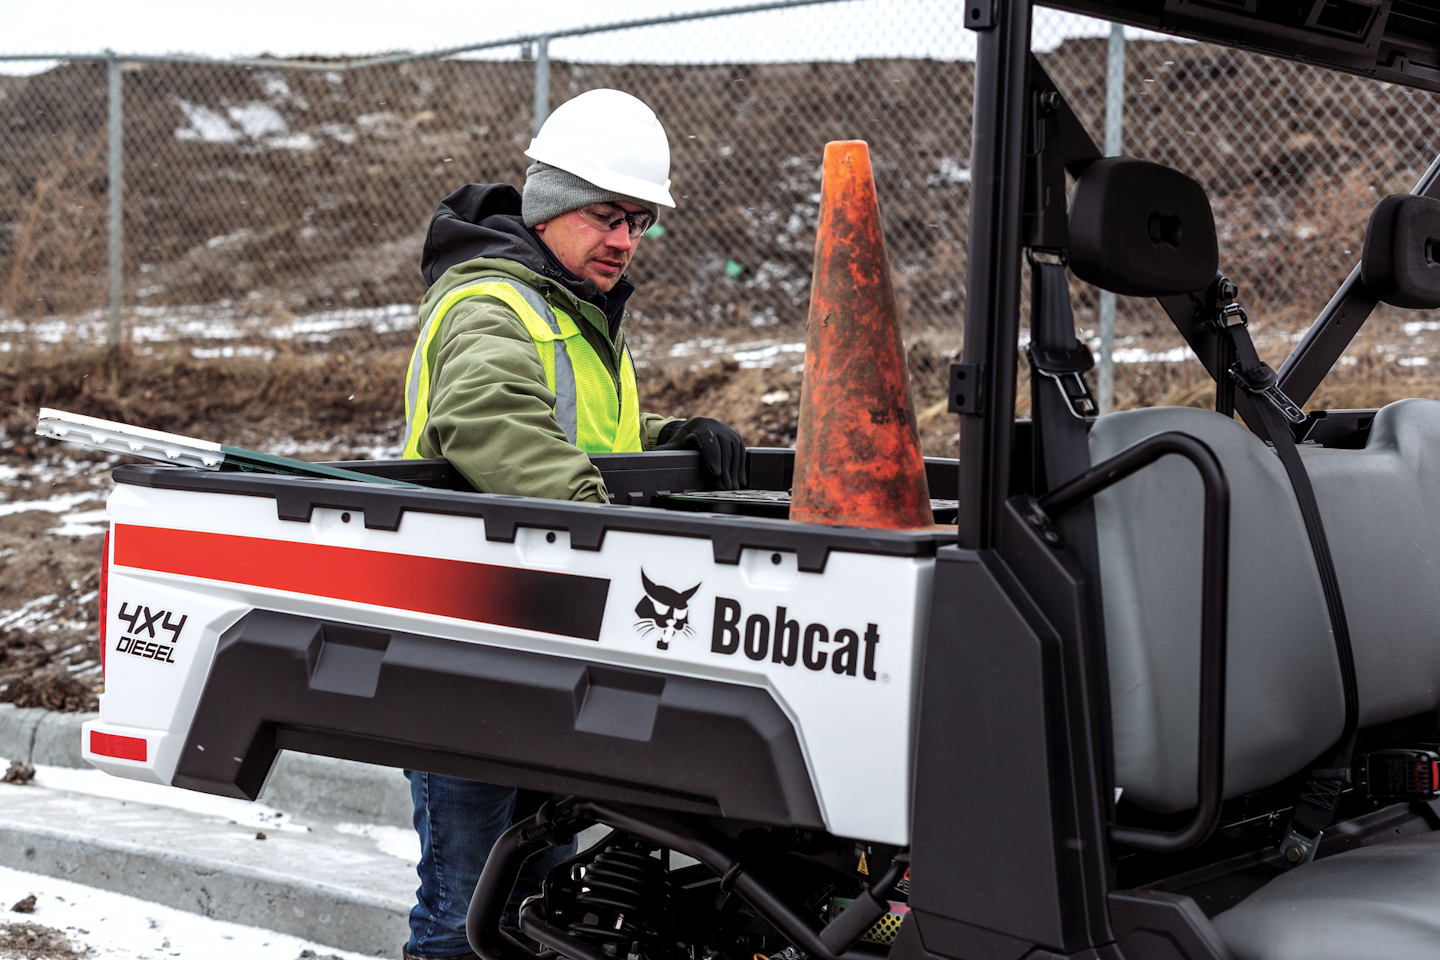 Bobcat Uv34xl Road Construction S6c3525 19n4 Fc